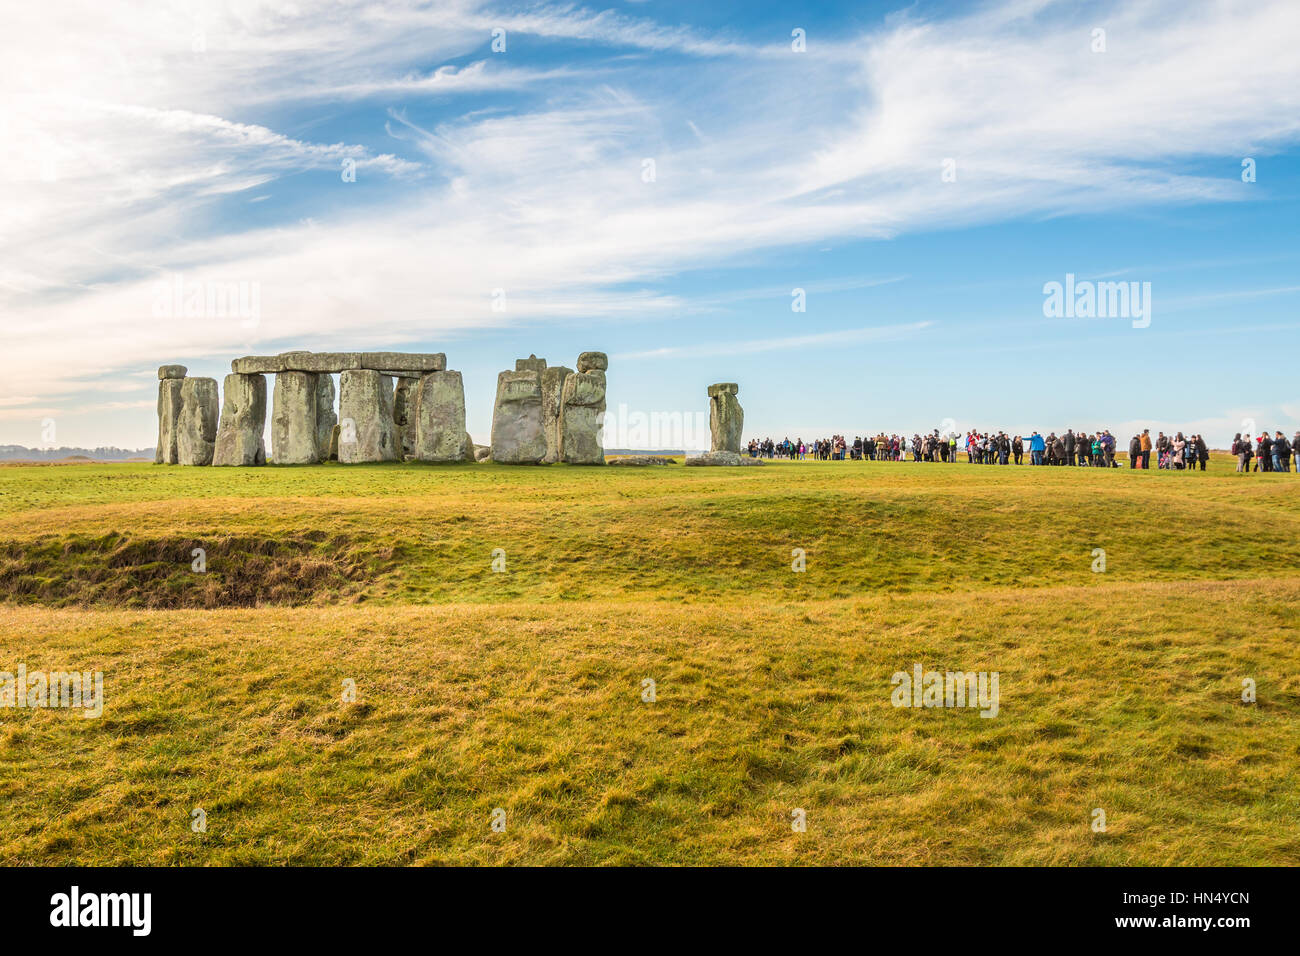 The Stonehenge ruins in England Stock Photo